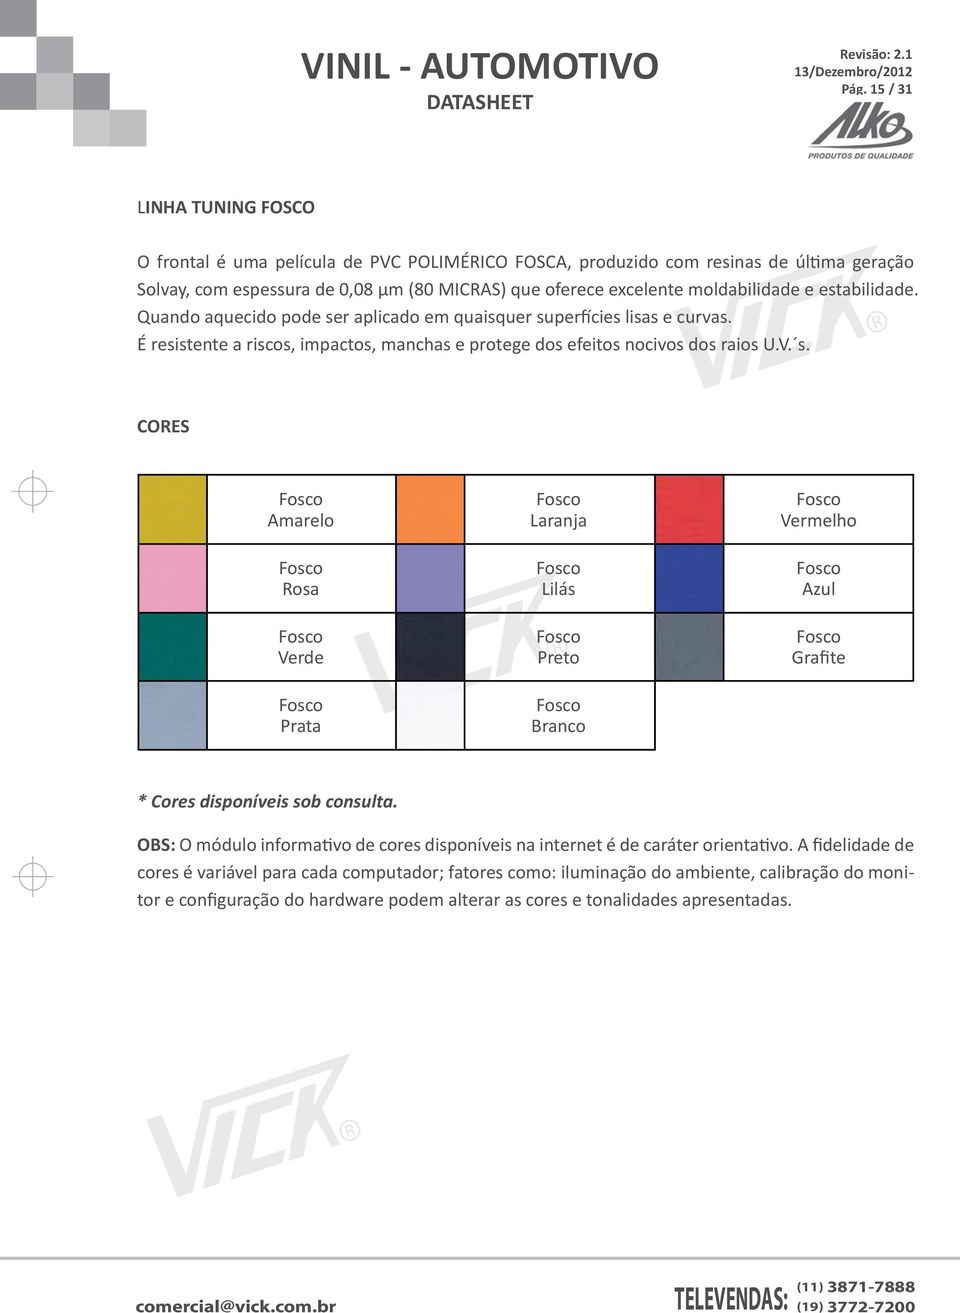 OBS: O módulo informativo de cores disponíveis na internet é de caráter orientativo.